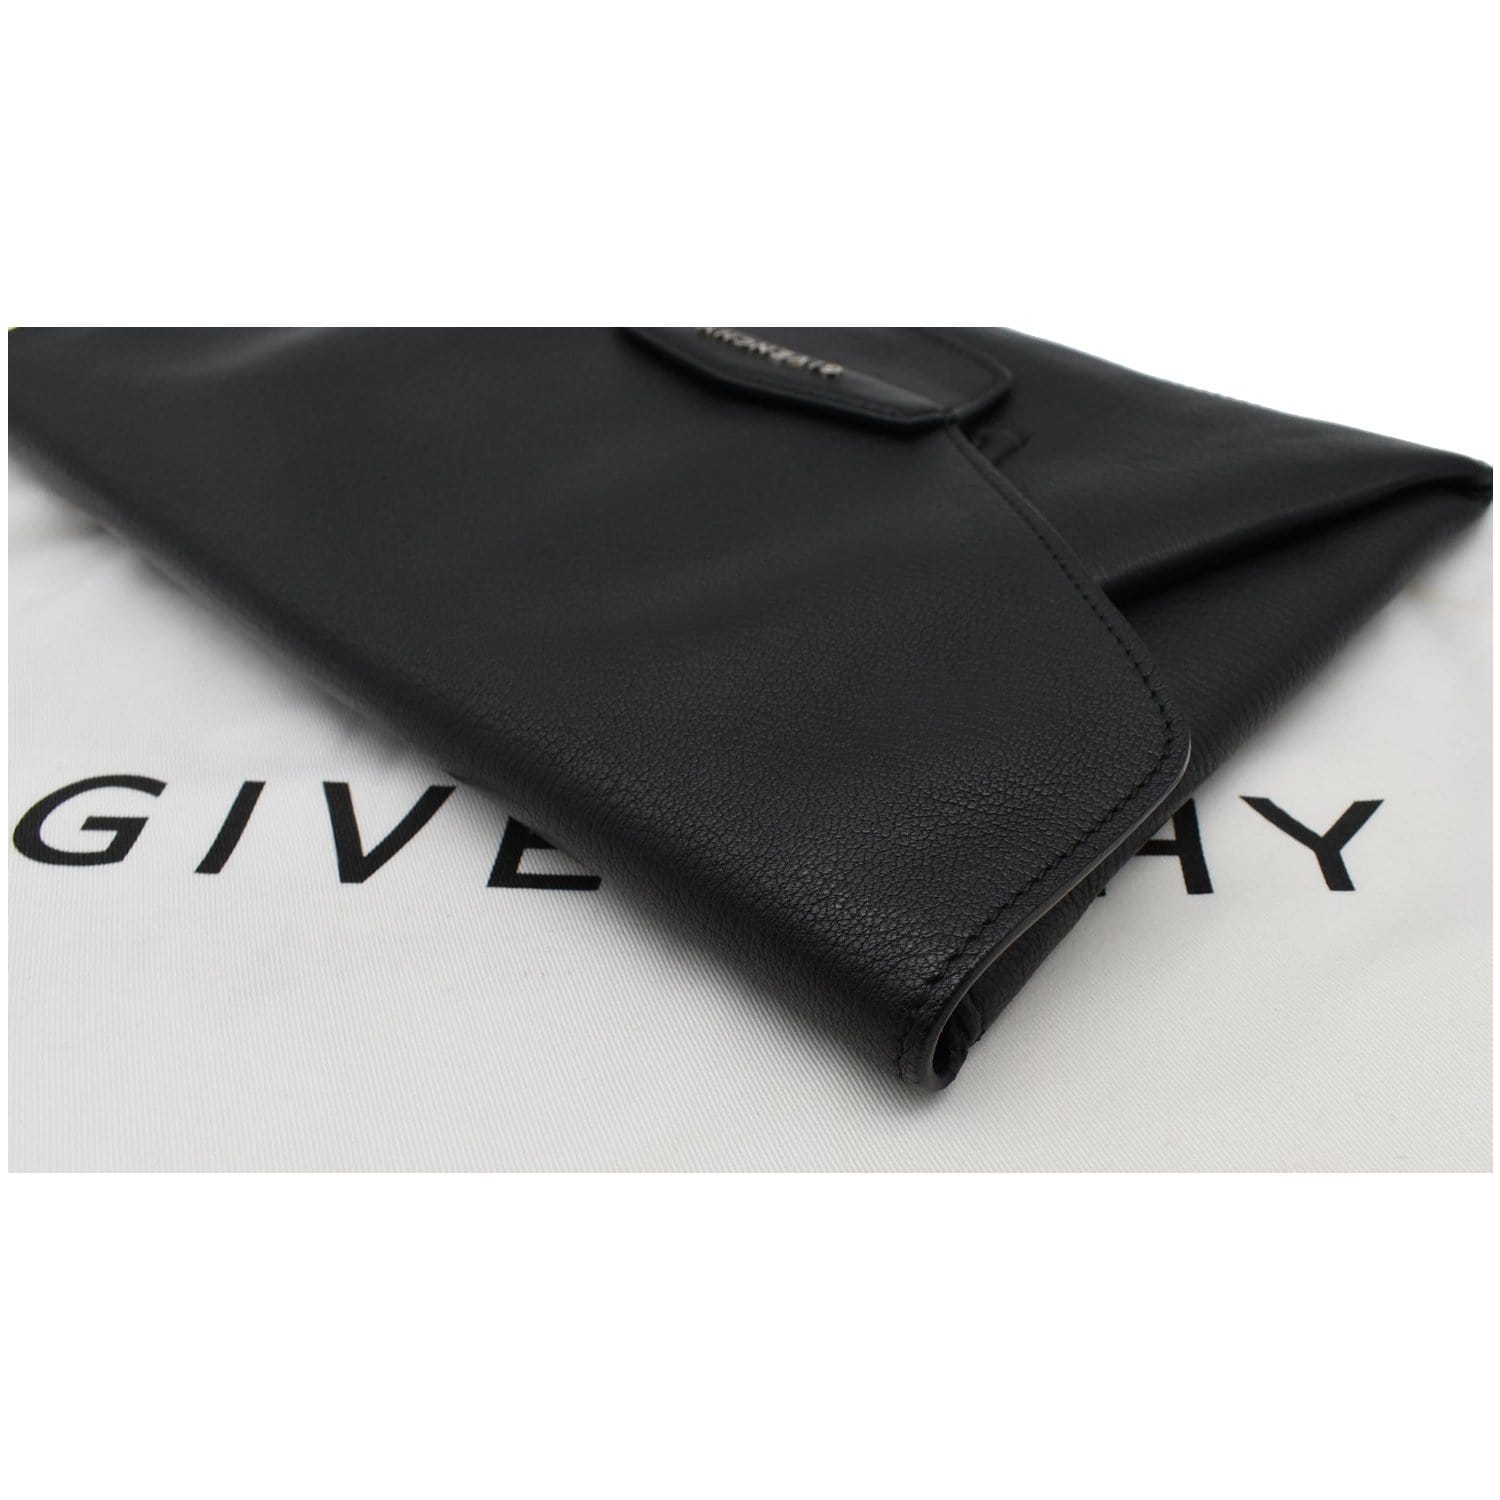 Givenchy Antigona Leather Clutch